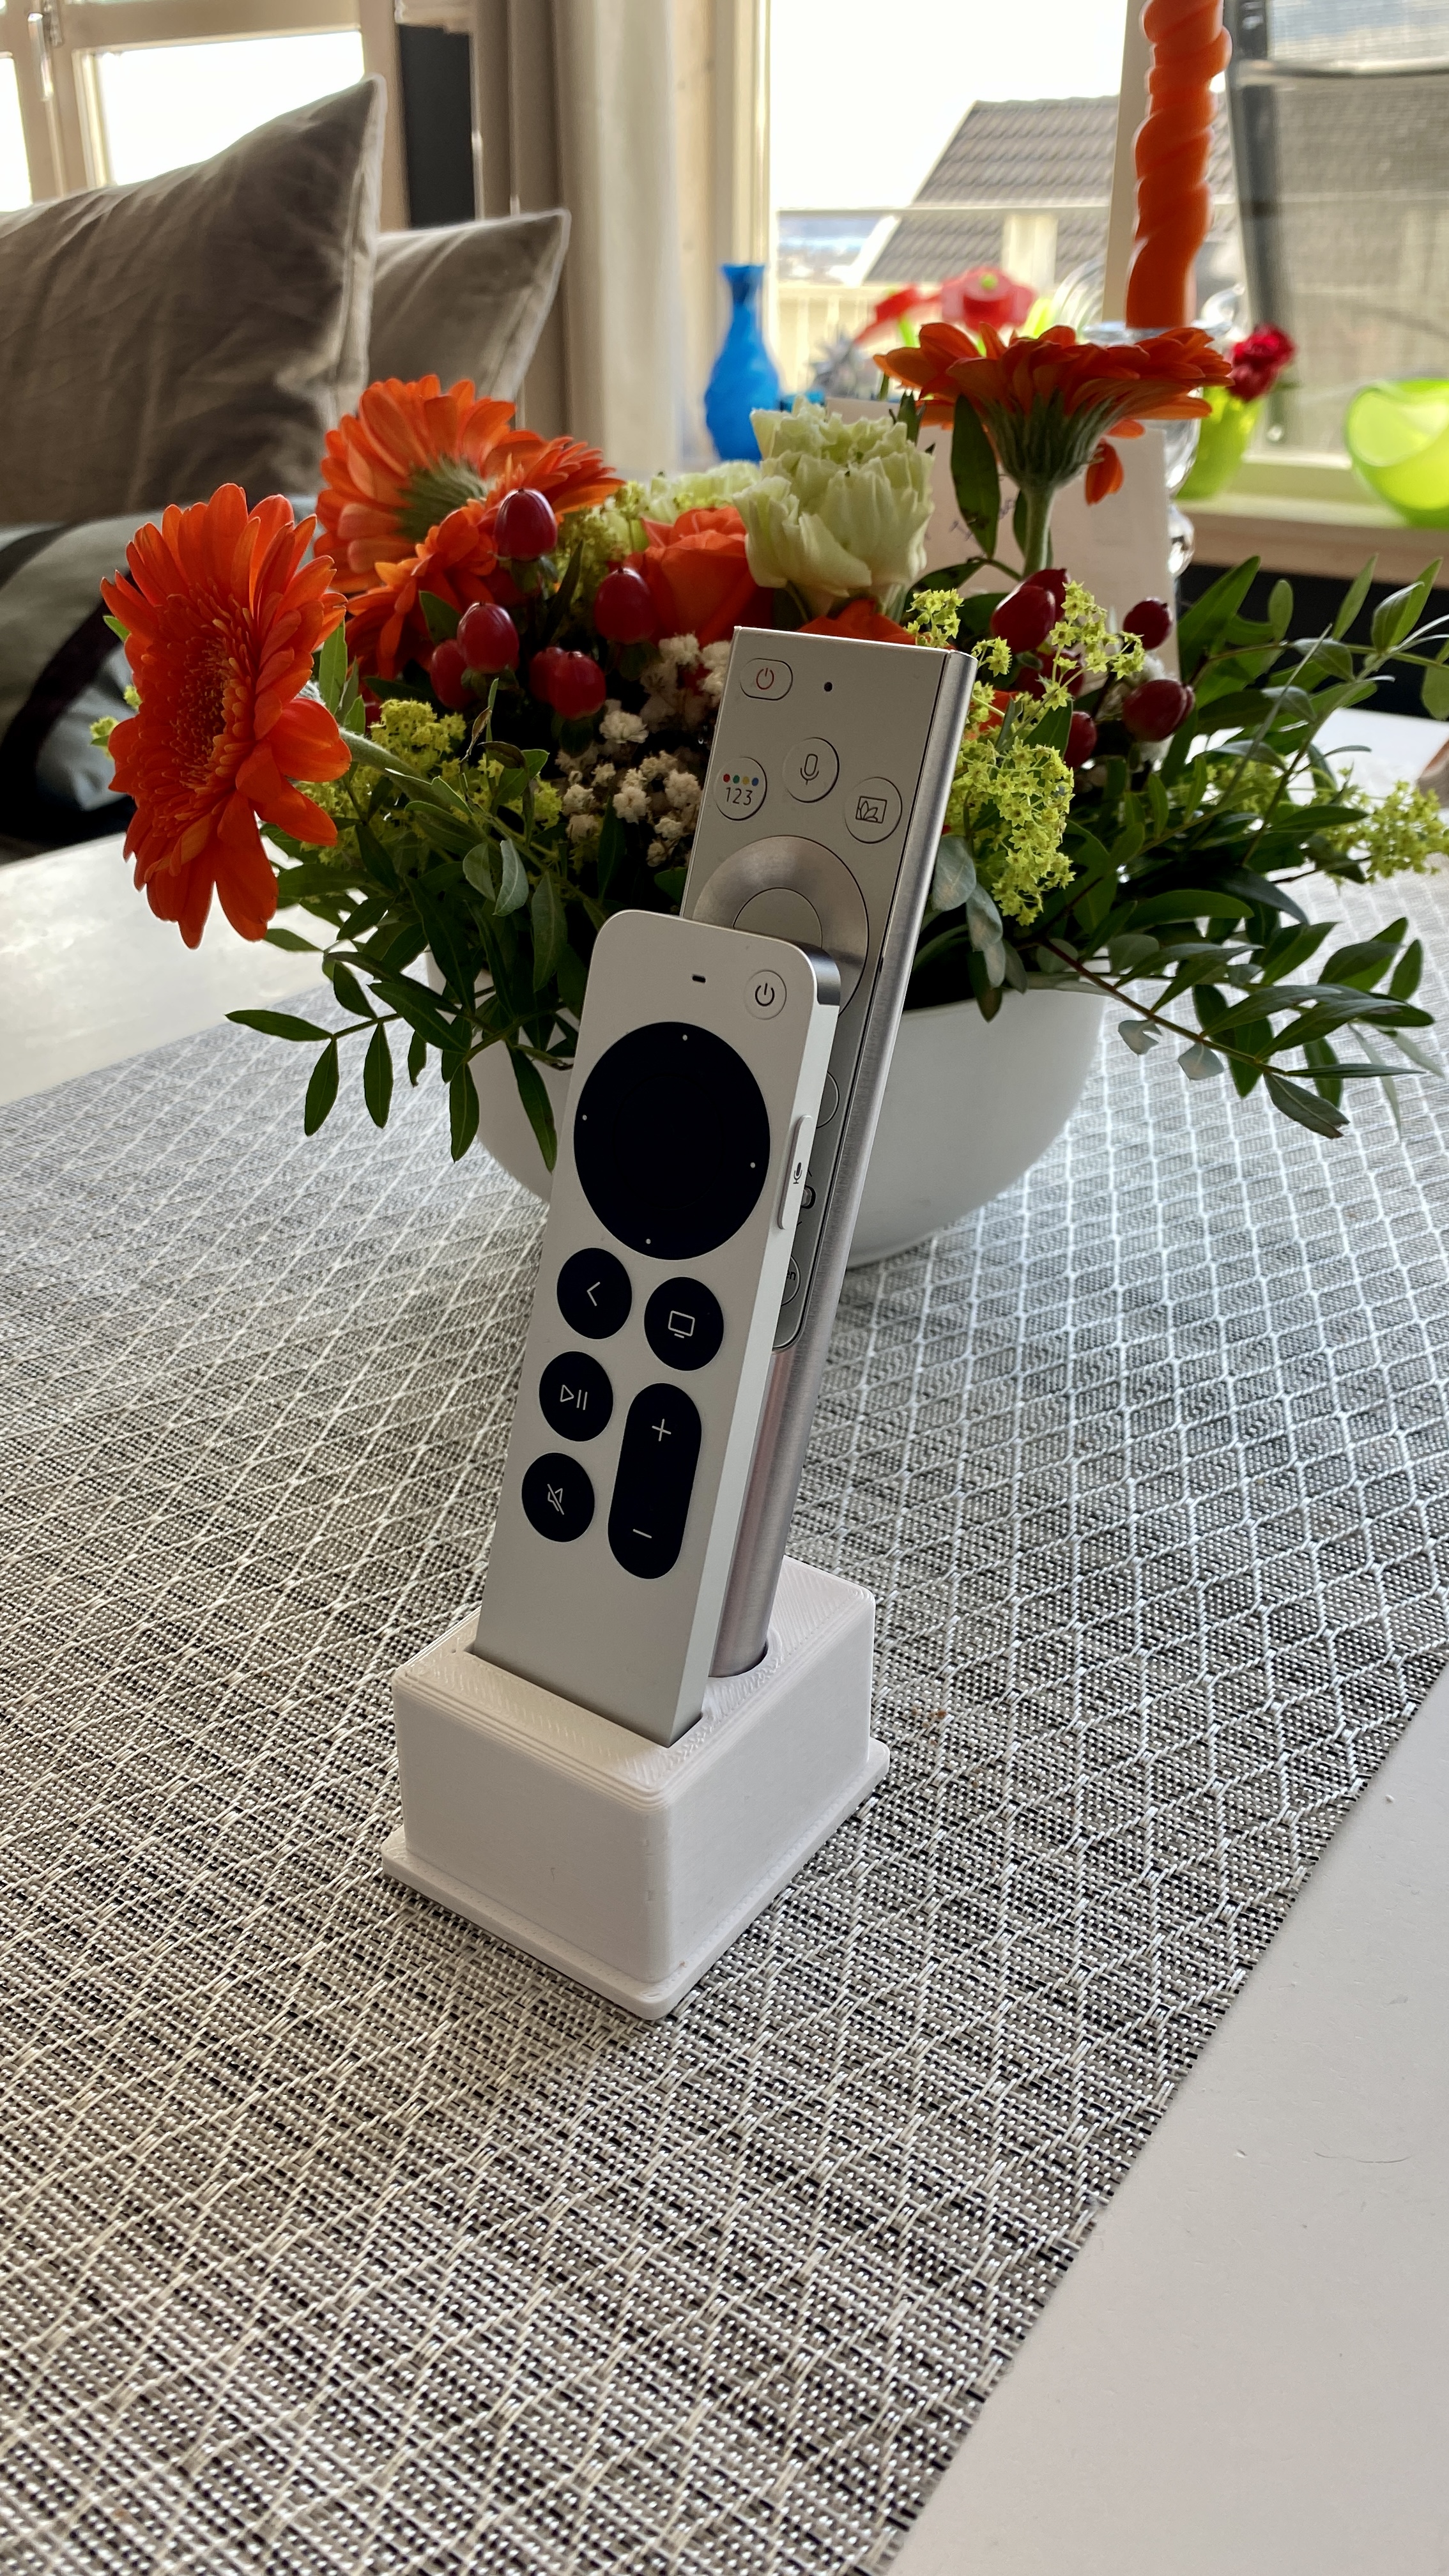 Apple TV 2021 & Samsung TV remote control holder